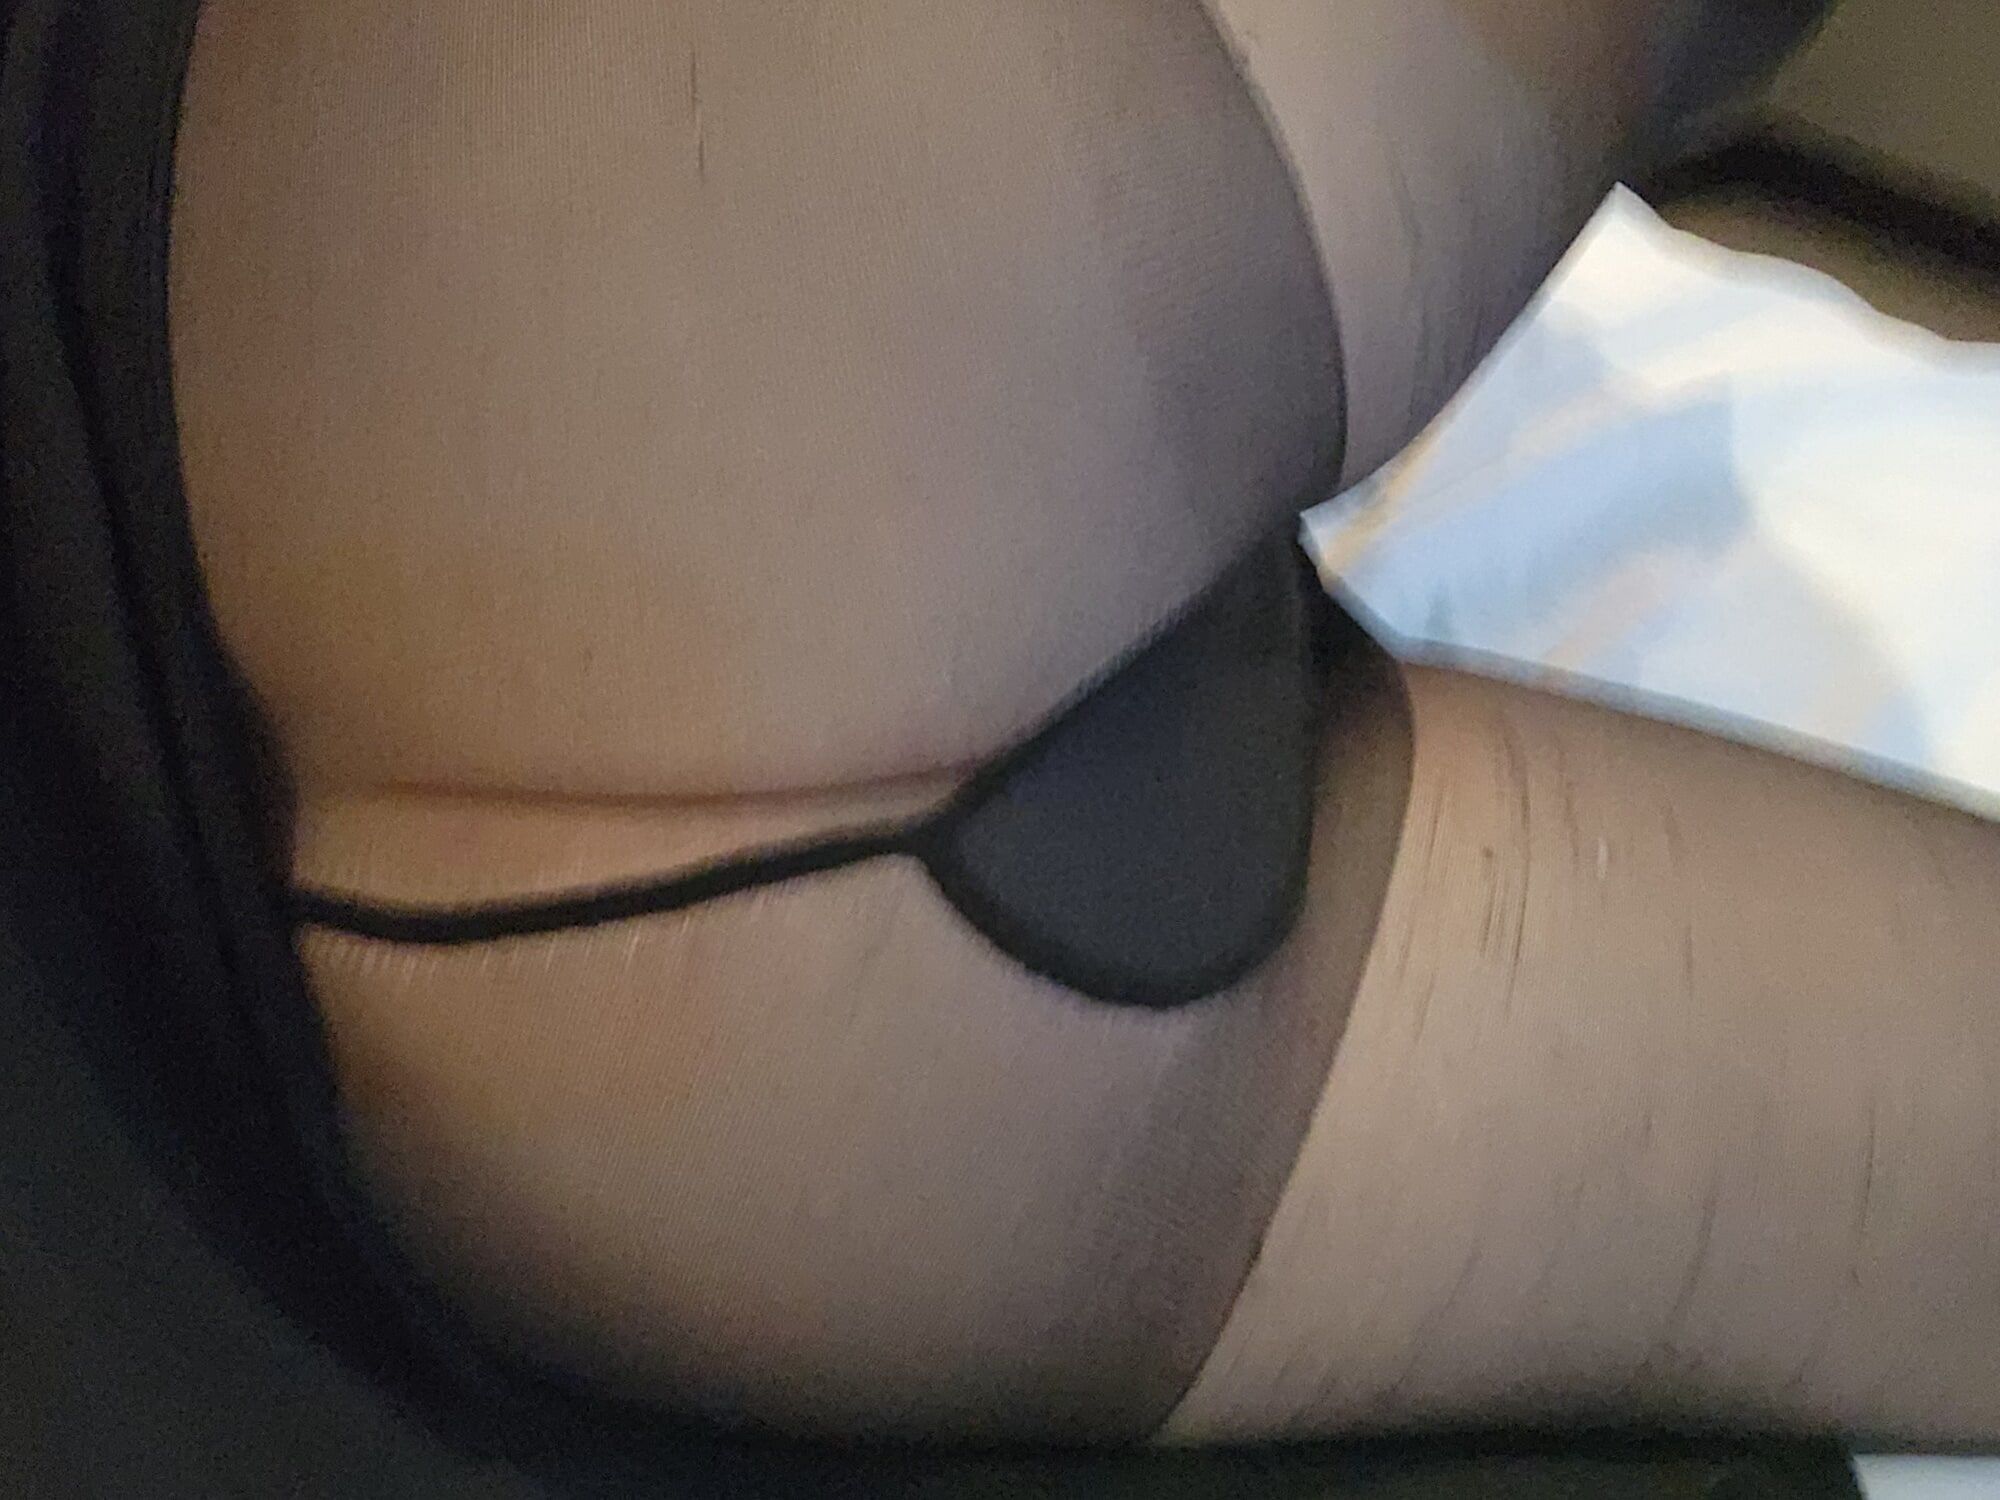 Wearing my sexy stockings #13